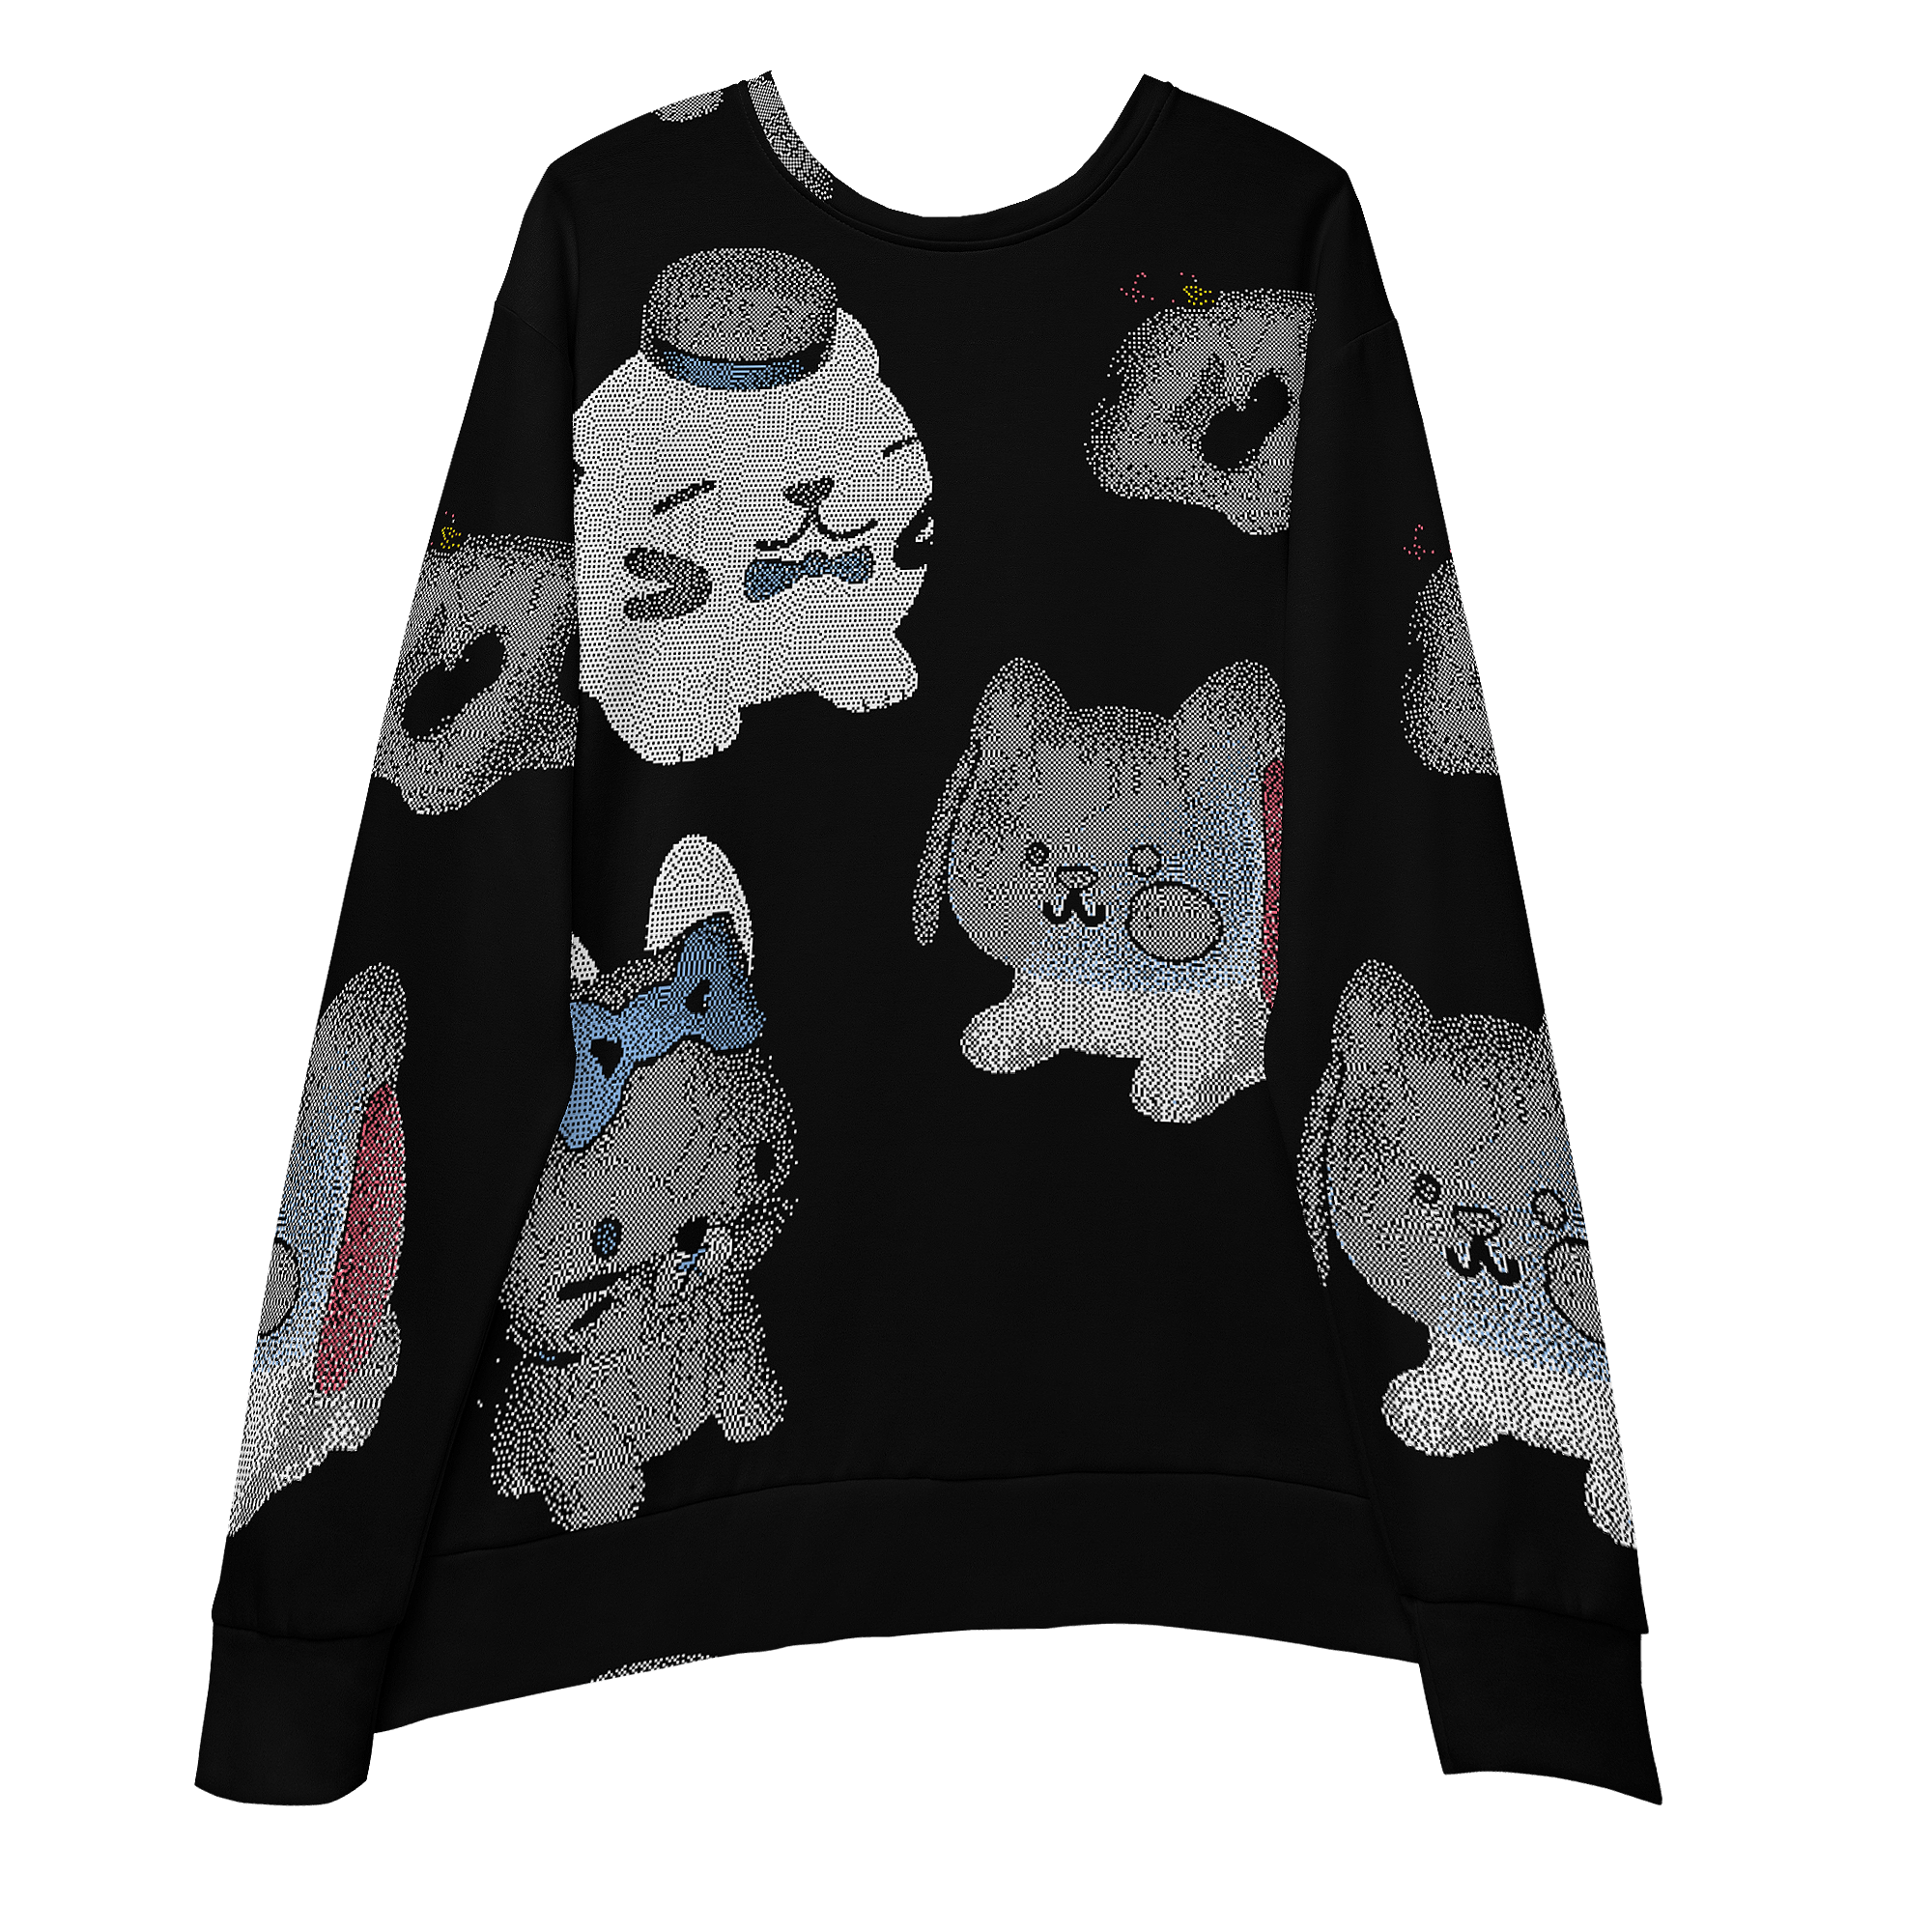 Kute Dream 111® Unisex Sweatshirt (7 pieces for sale) - Kikillo Club